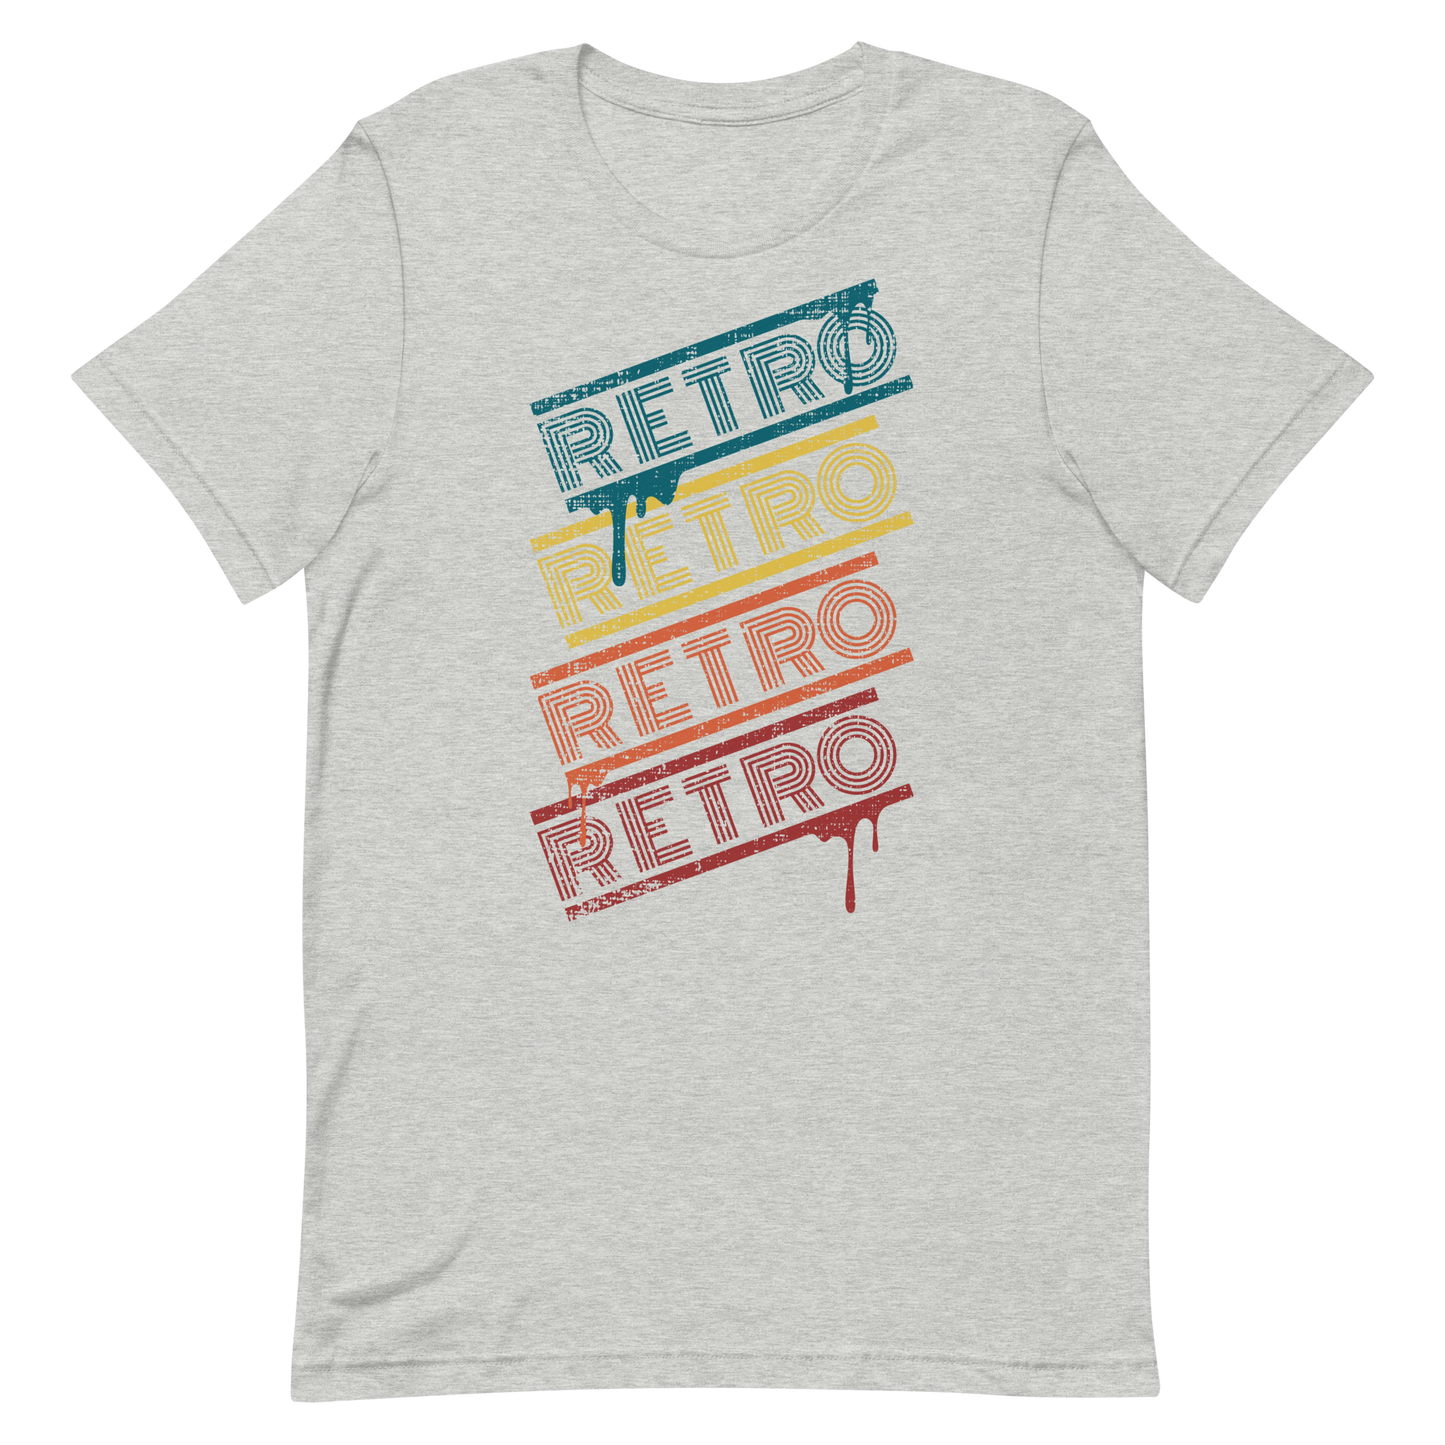 Retro Unisex T-Shirt - Colorful Retro Typography Design Athletic Heather